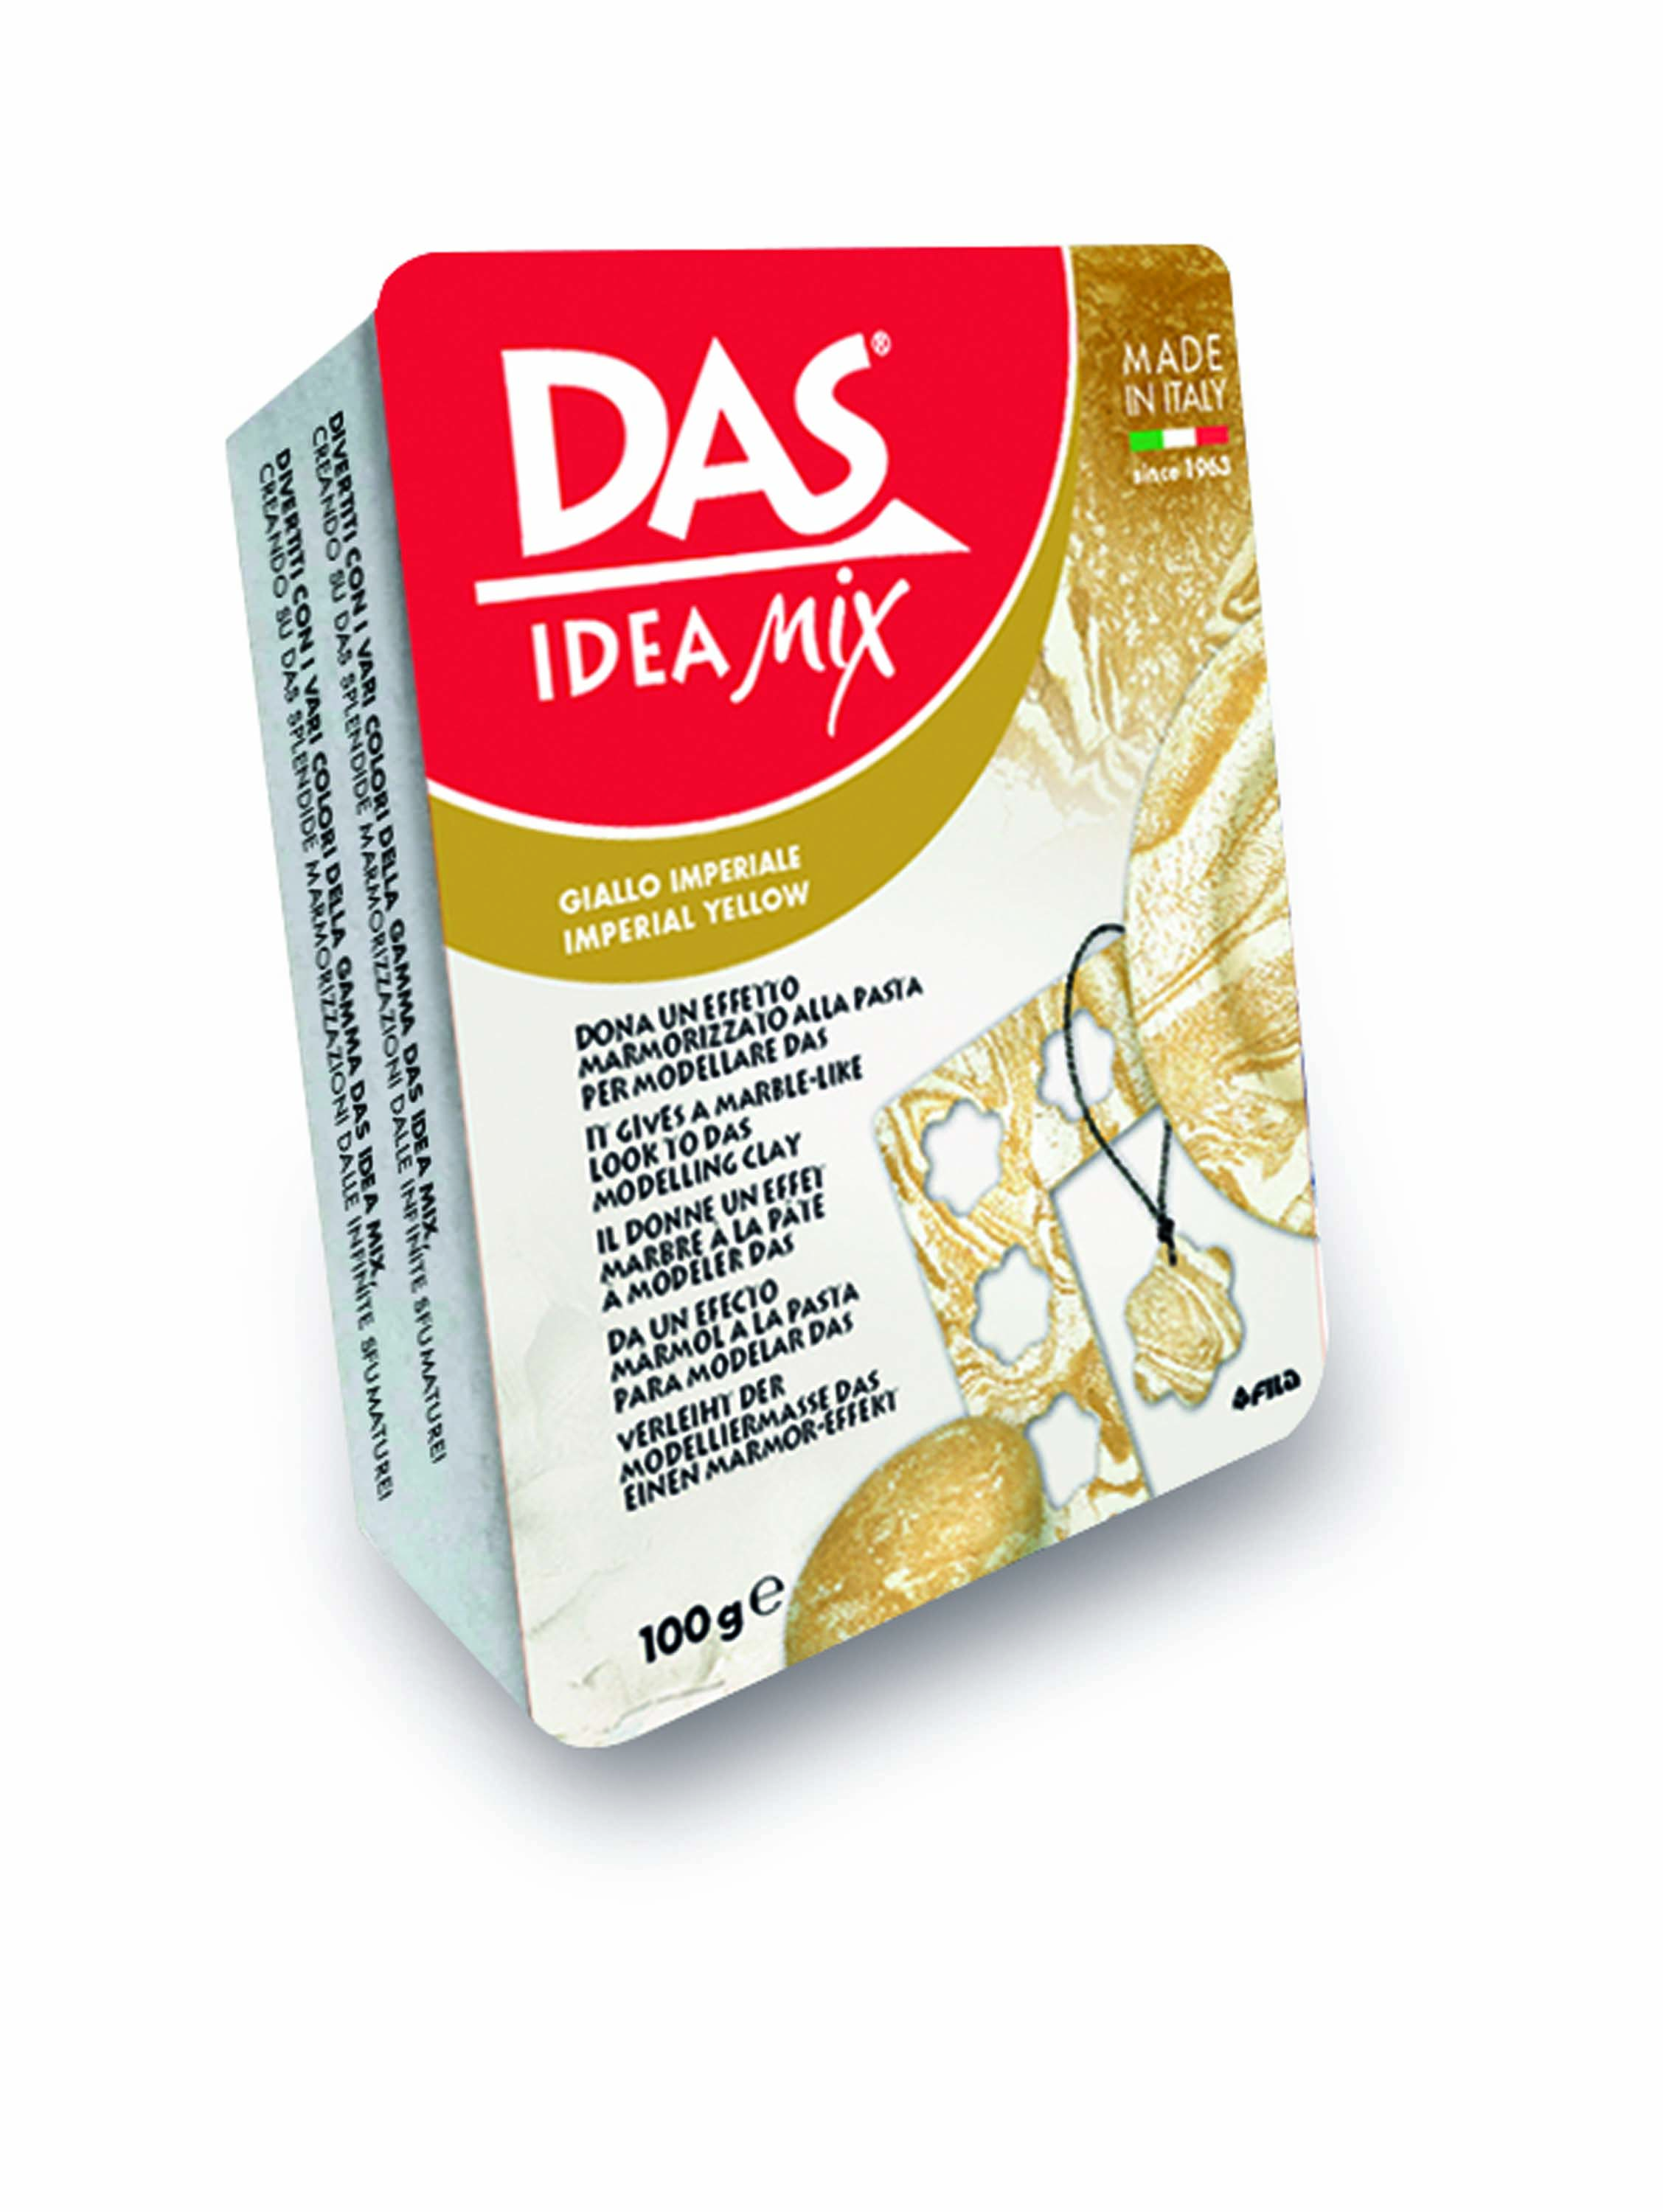 DAS Idea Mix (100g) Imperial Yellow